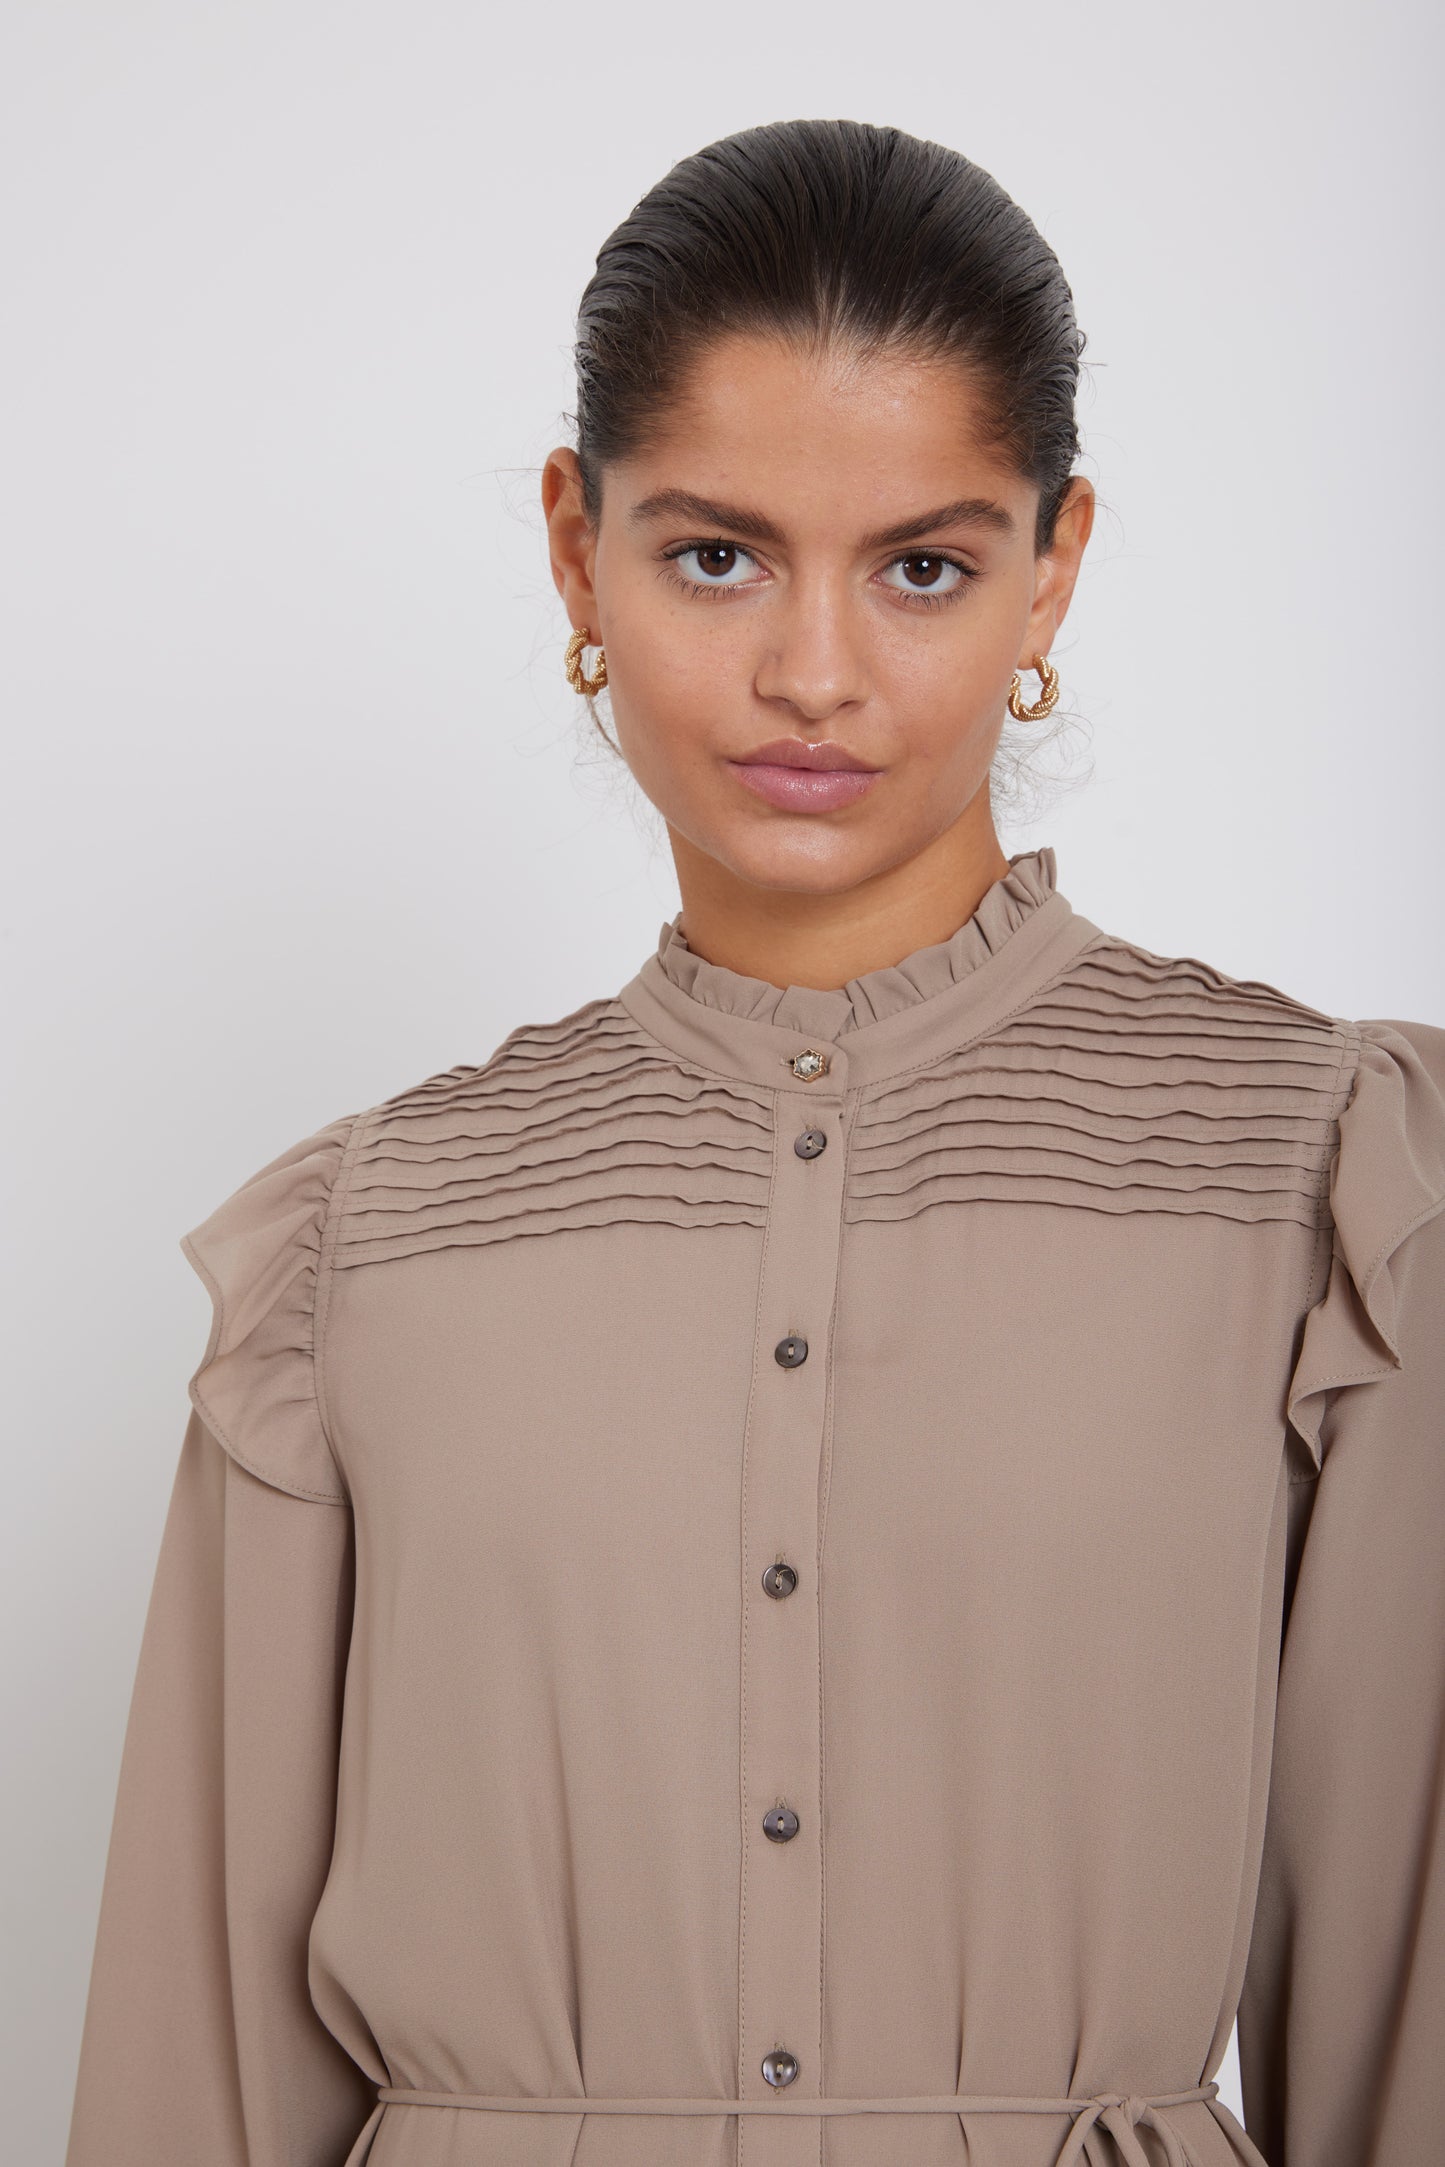 Bruuns Bazaar Women - CamillaBBNichola dress - Roasted Grey Khaki